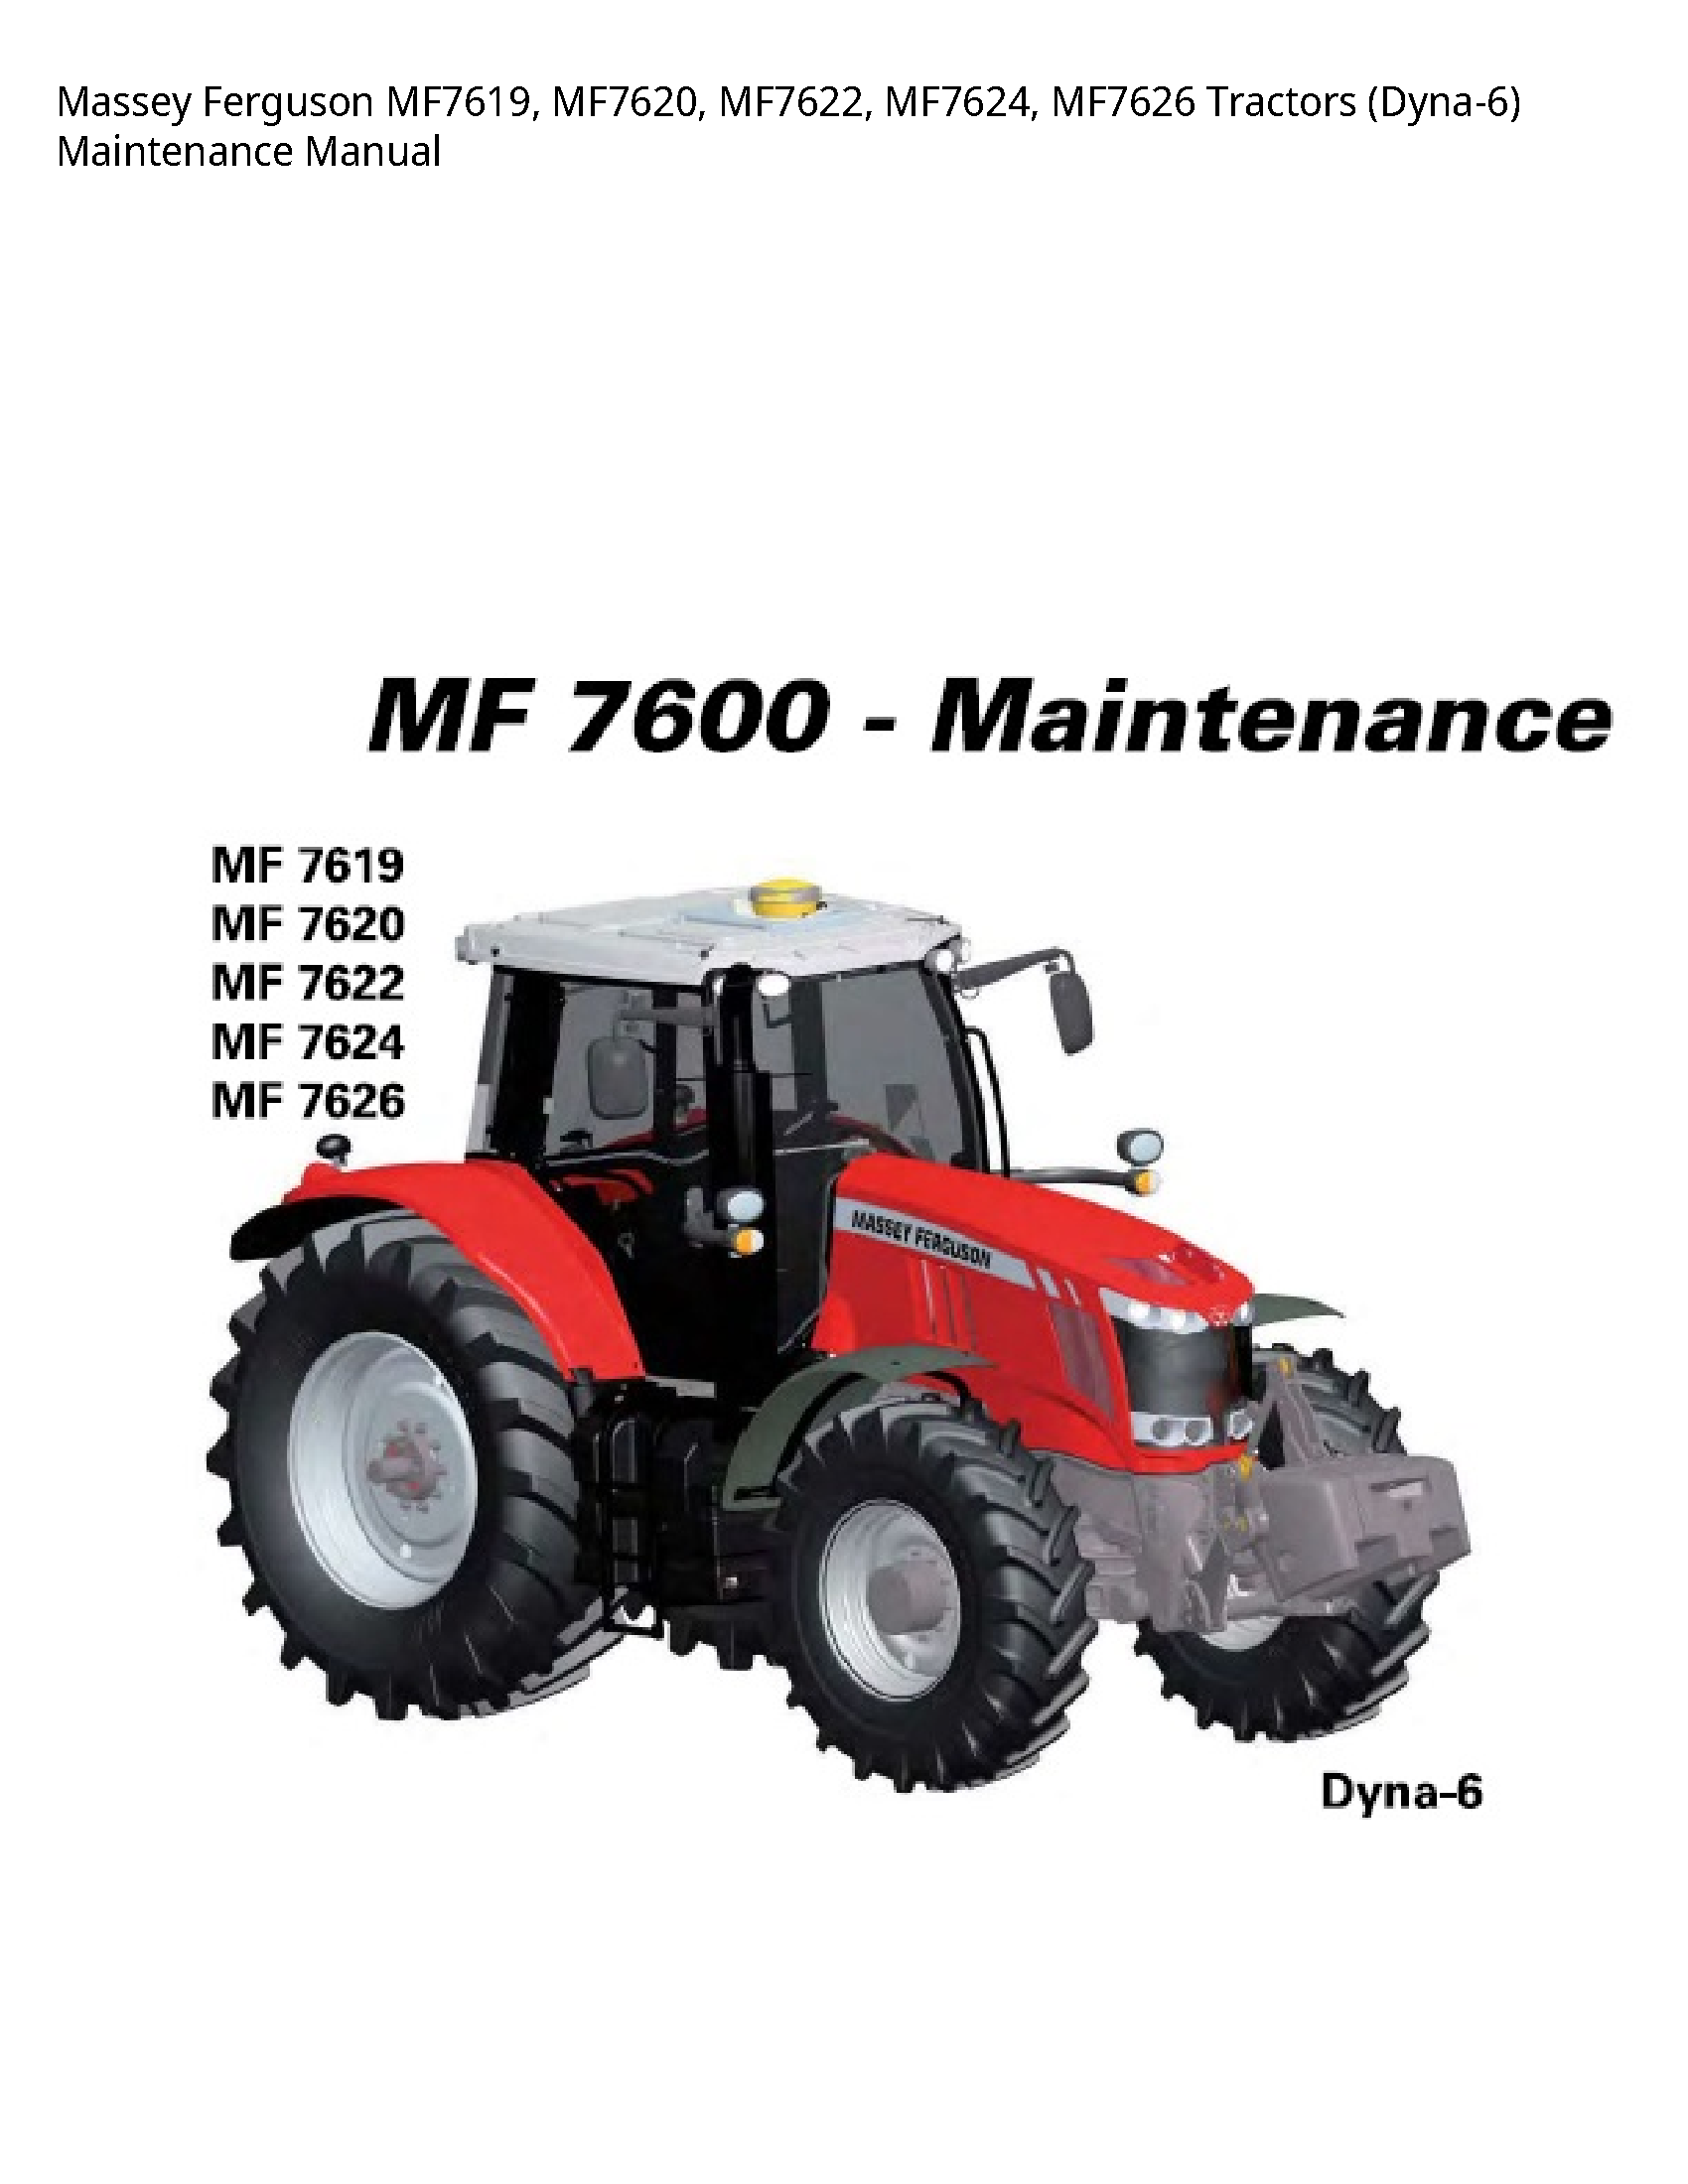 Massey Ferguson MF7619 Tractors Maintenance manual